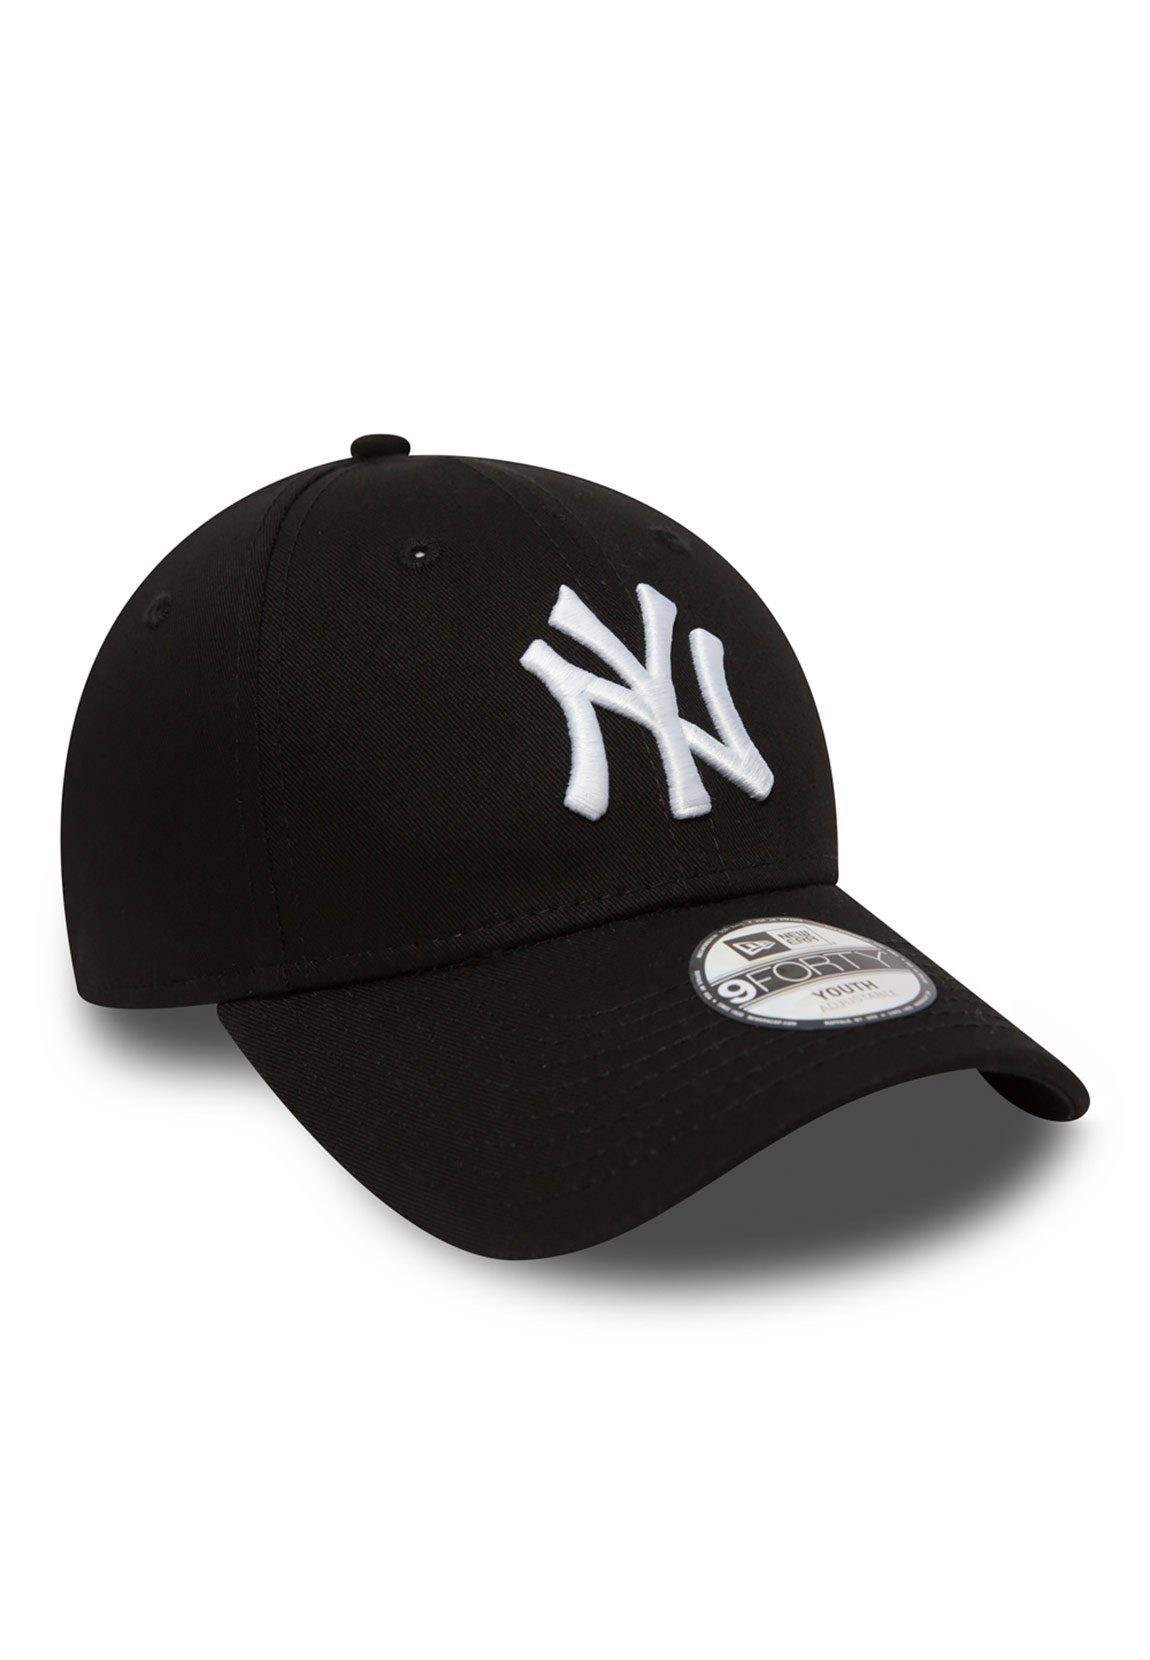 New Era - Era Cap Kids YANKEES Schwarz/Weiß NY Cap Baseball Black-White - New Adjustables